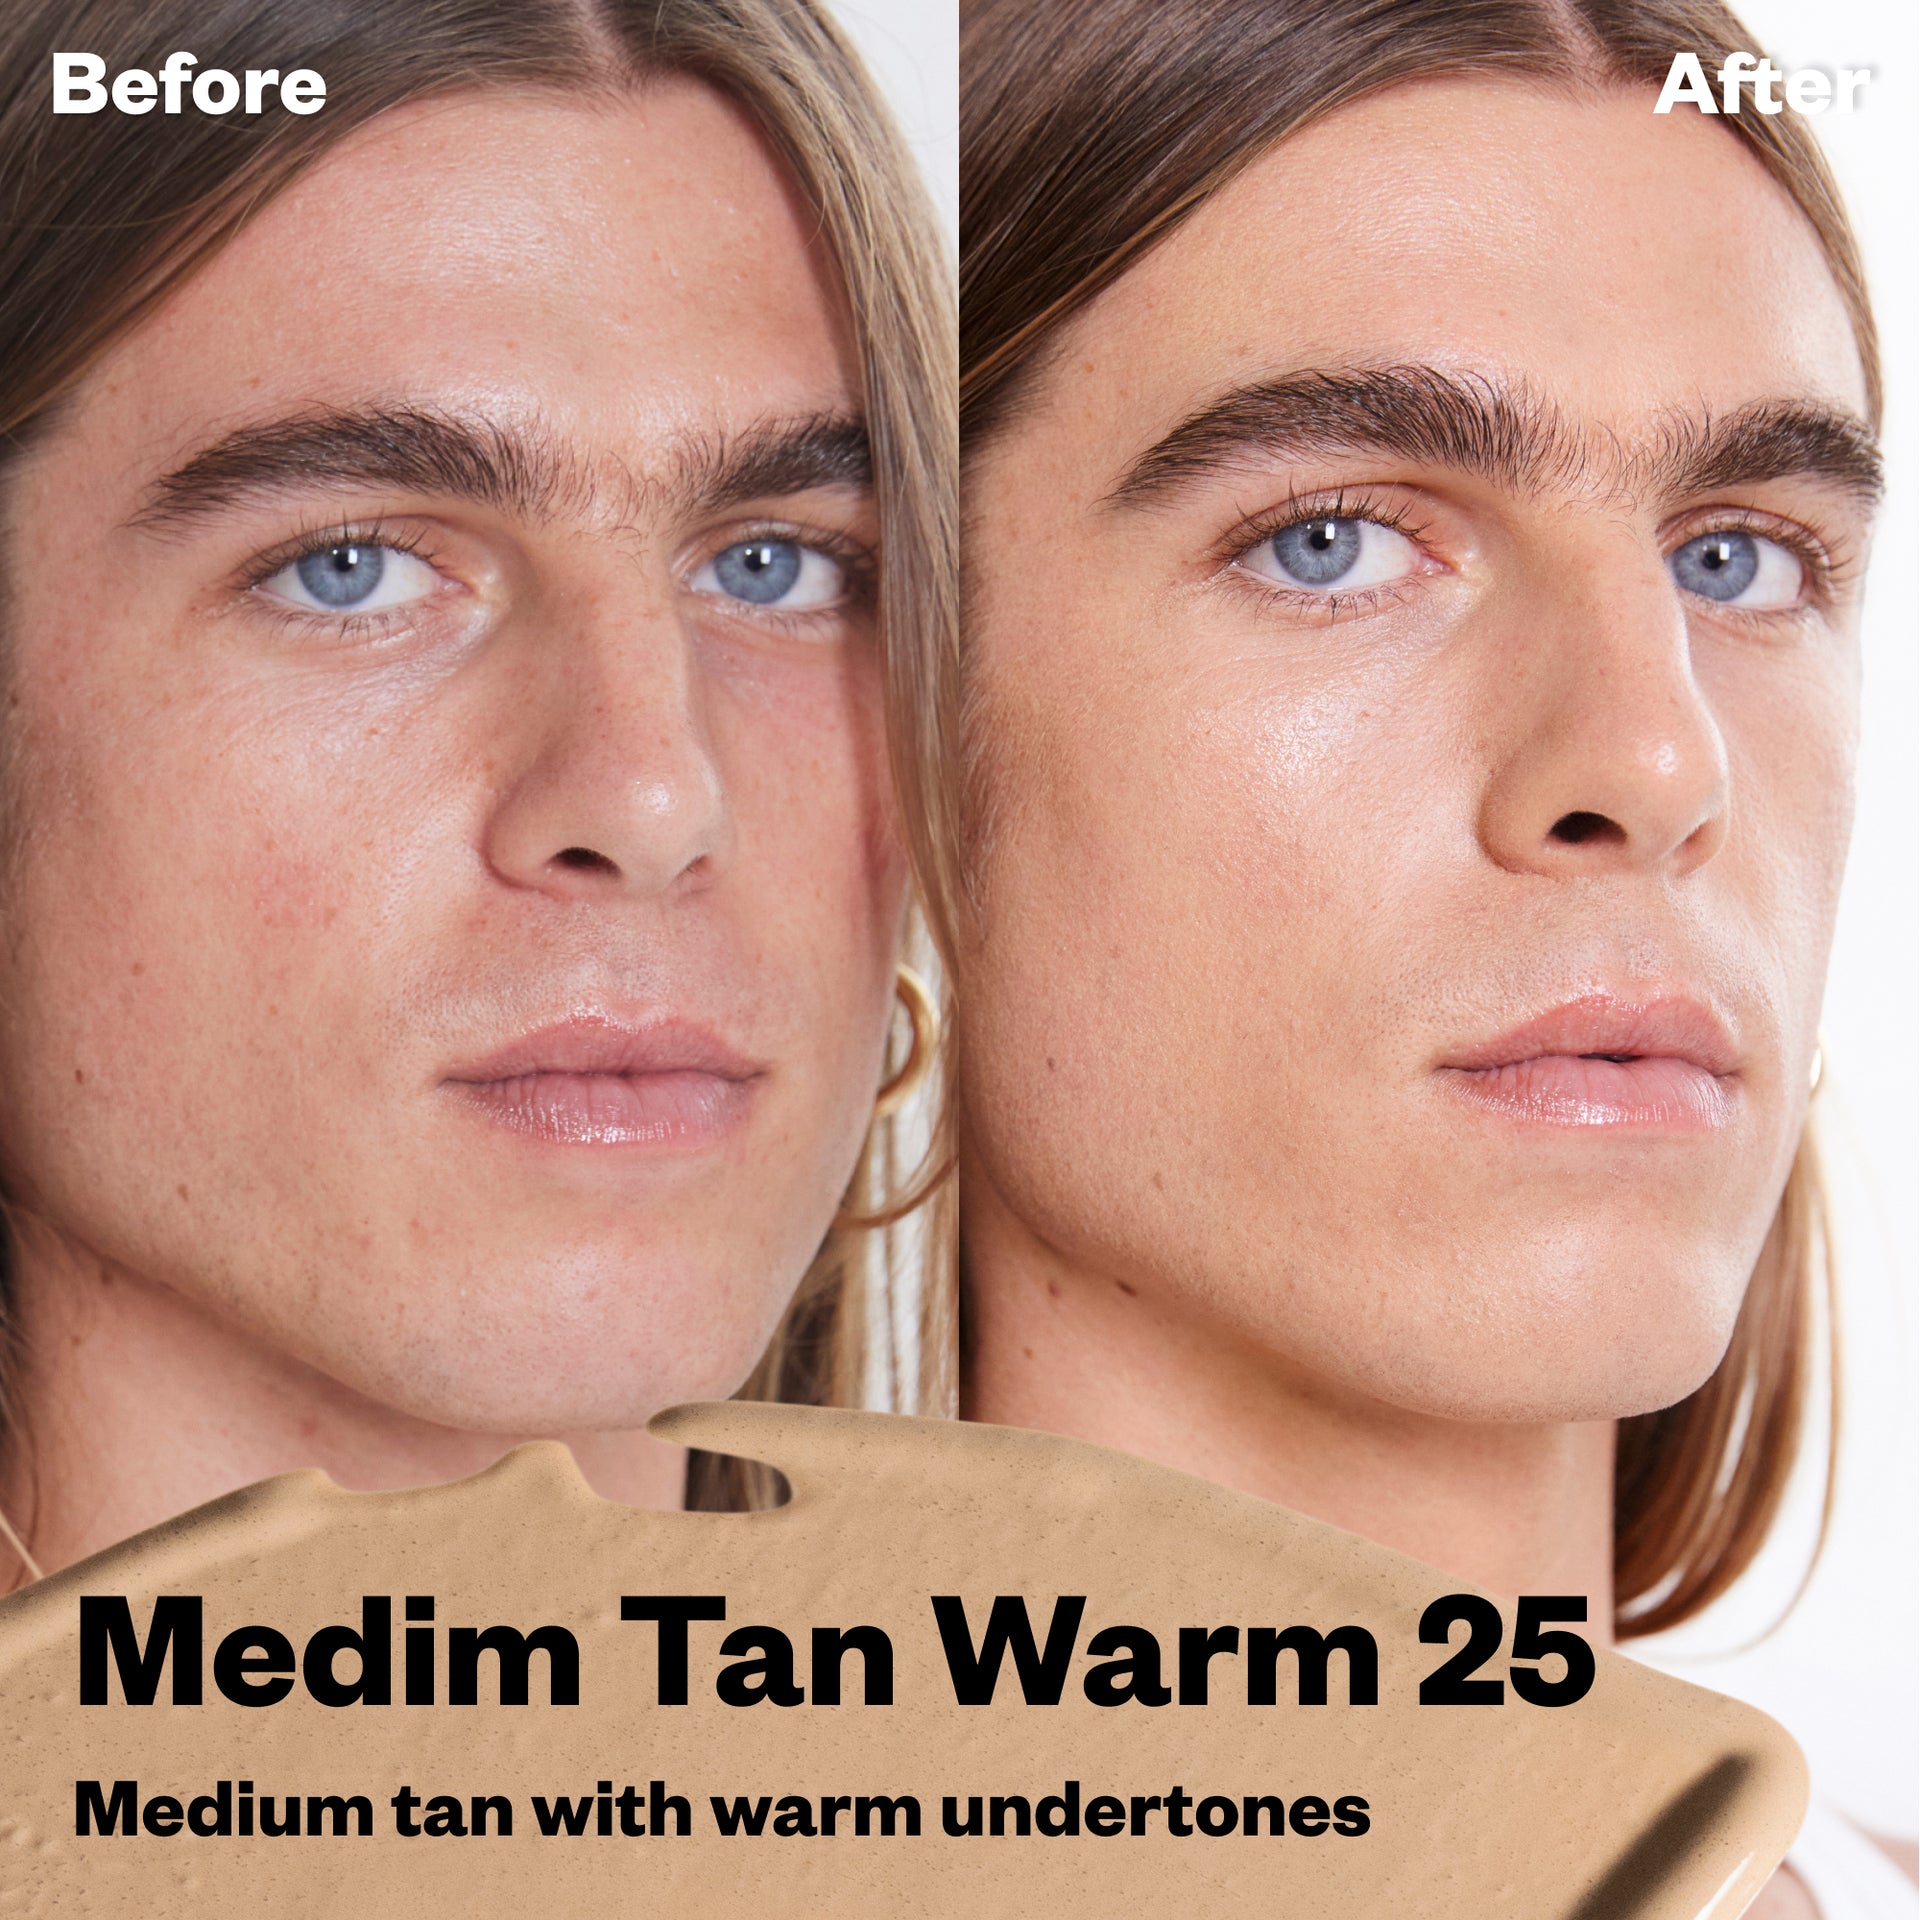 Before and after using BB Burst Medium Tan Warm 25 (Medium tan with warm undertones).